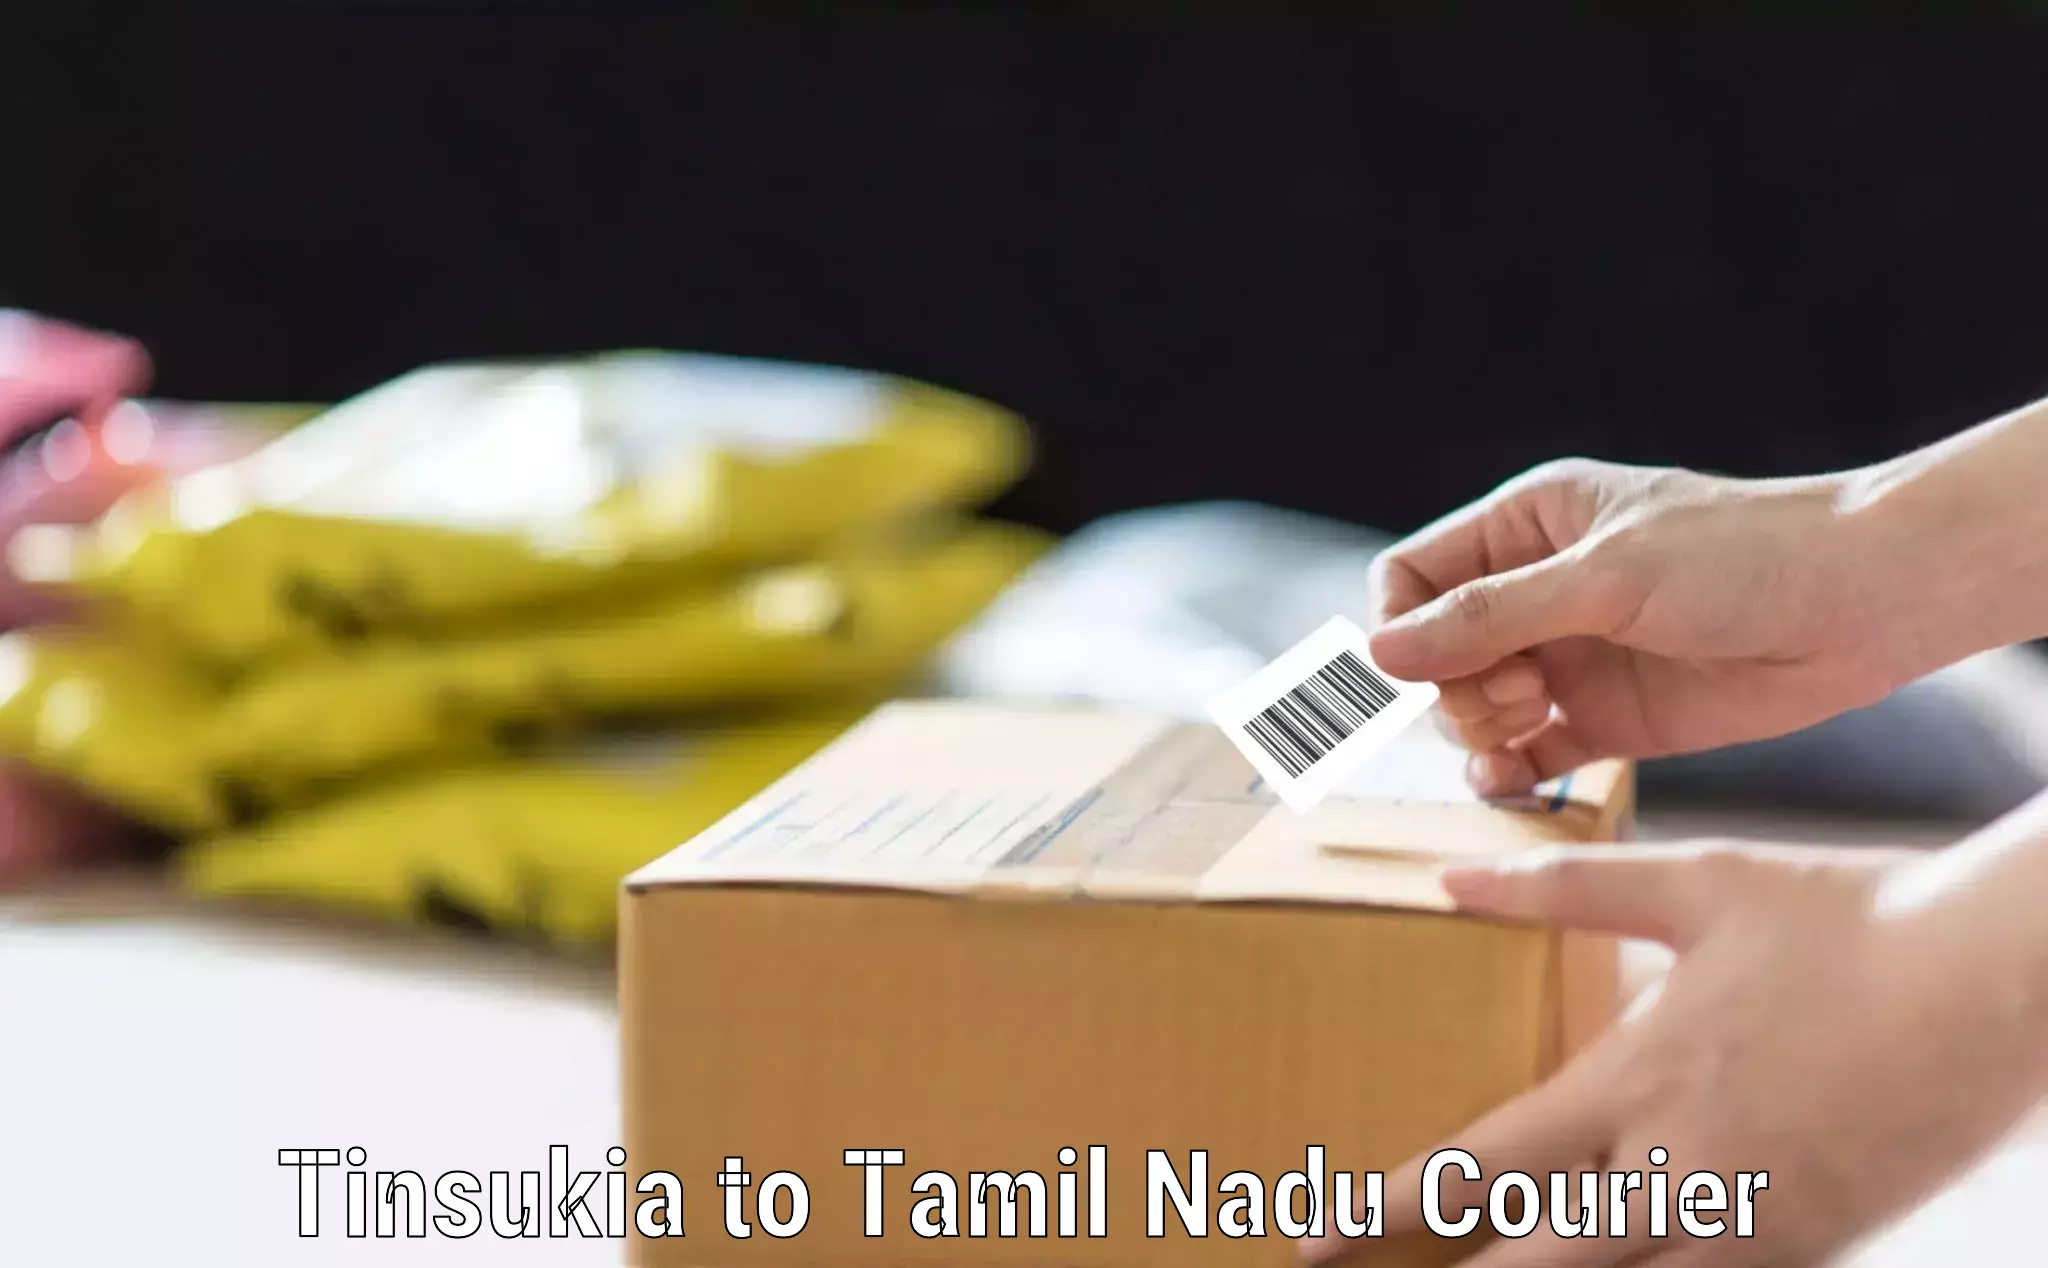 Professional baggage delivery Tinsukia to Tamil Nadu